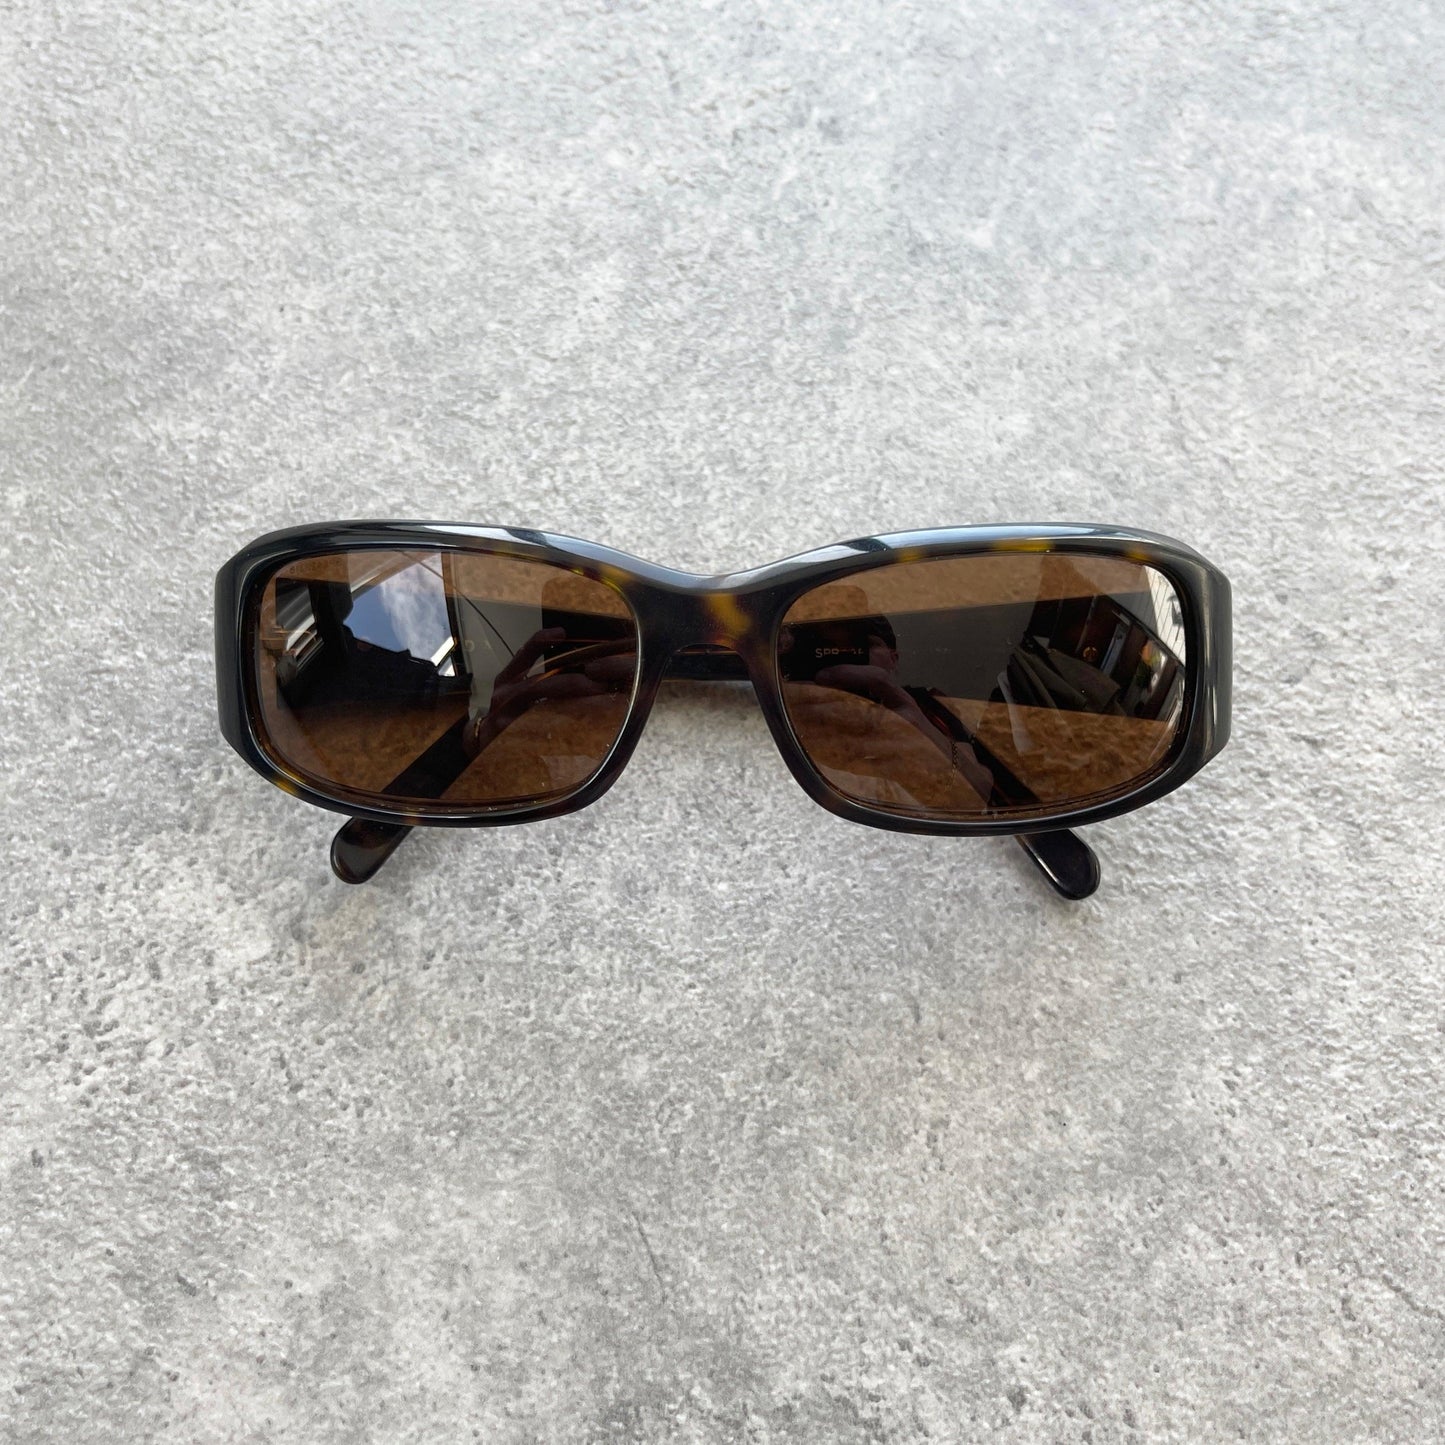 Prada 2000’s tortoise shell wrap around sunglasses - Known Source